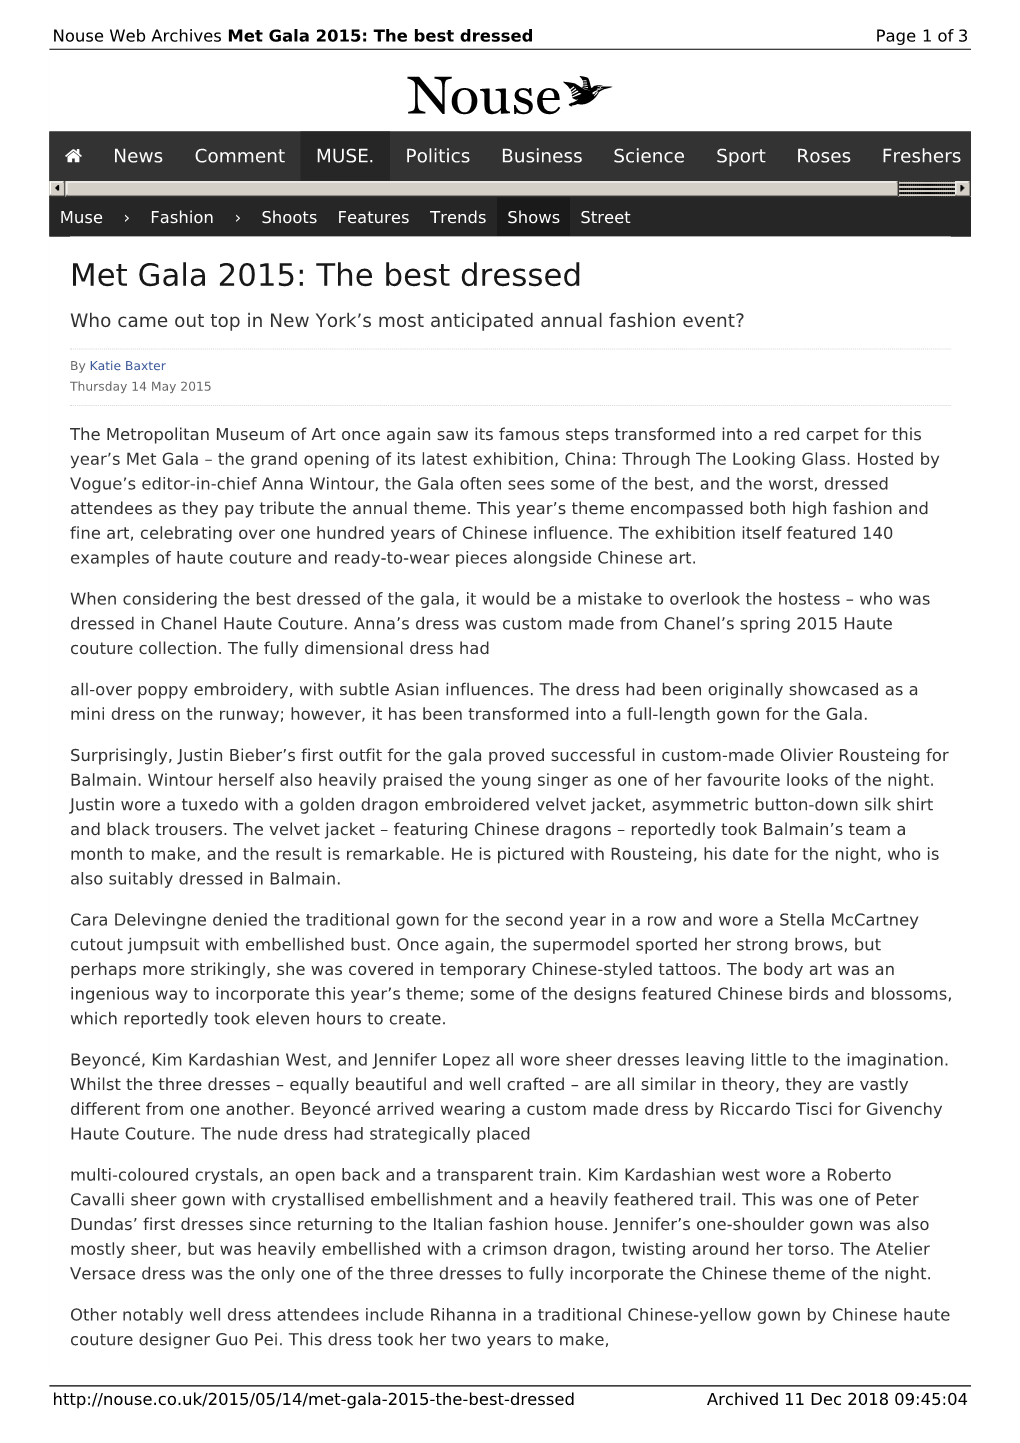 Met Gala 2015: the Best Dressed | Nouse